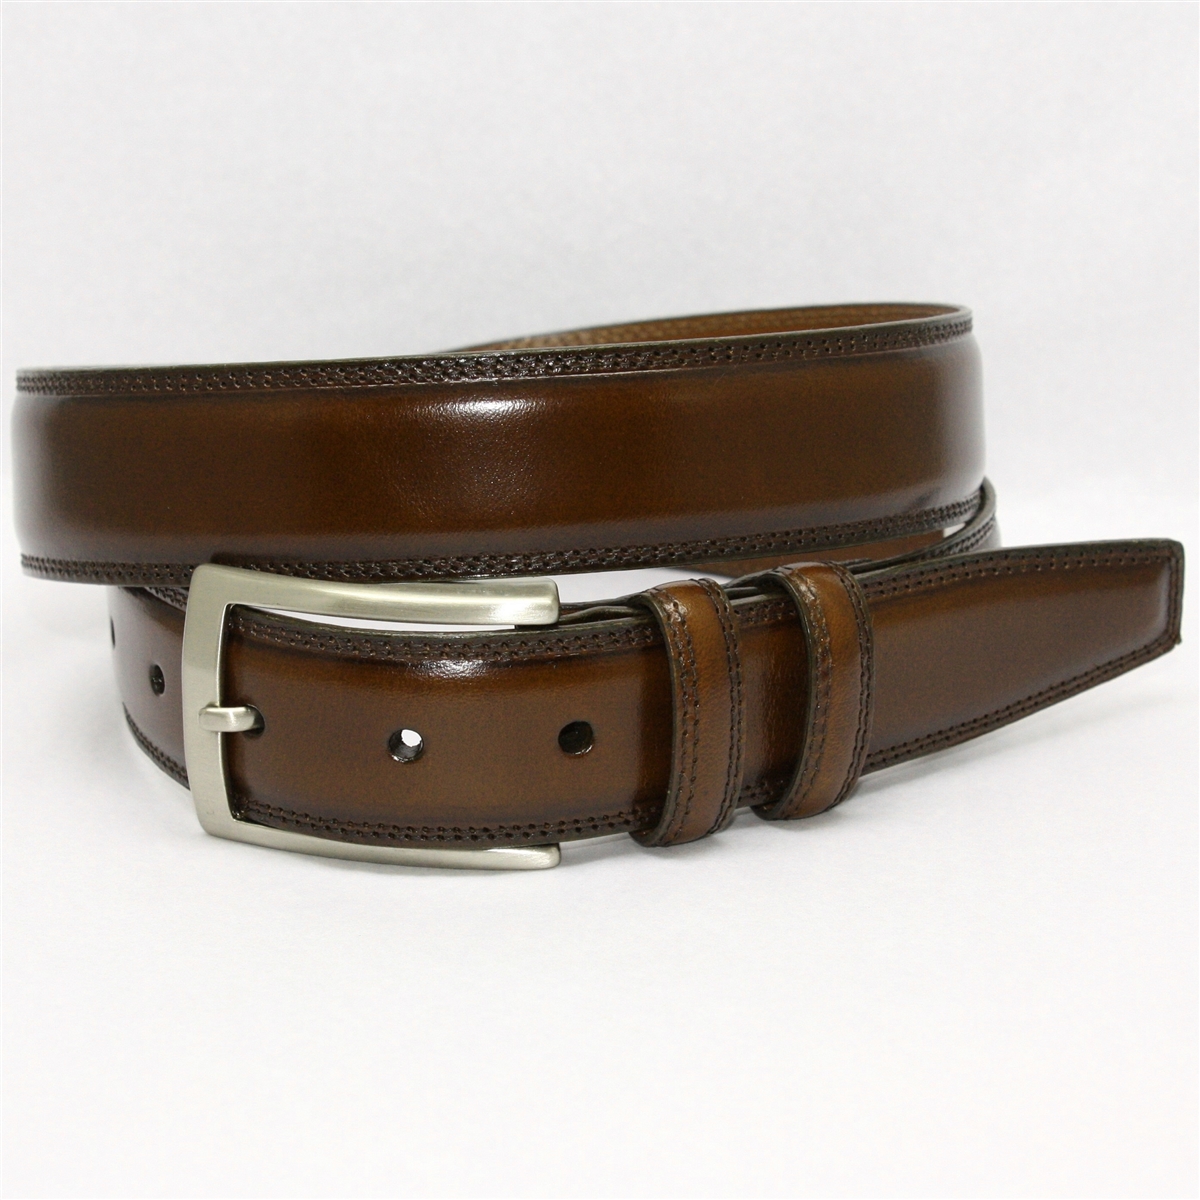 Torino Leather Italian Shrunken Grain Kipskin Leather Belt Antique Brown